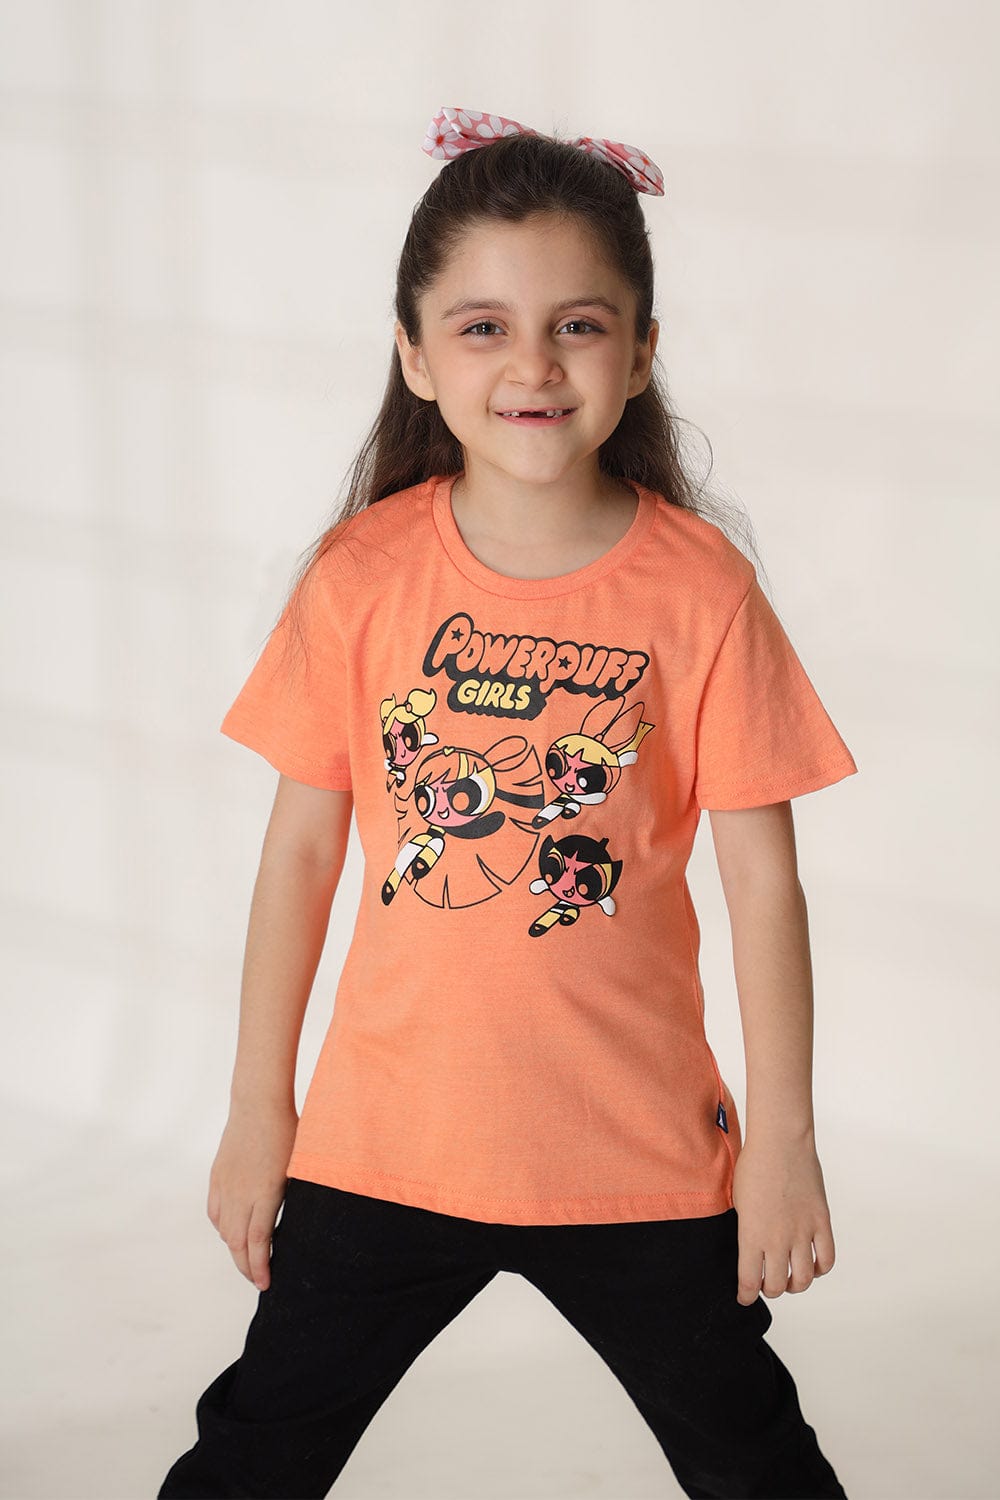 Hope Not Out by Shahid Afridi Girls Knit T-Shirt Girls Orange Powerpuff Girls T-Shirt